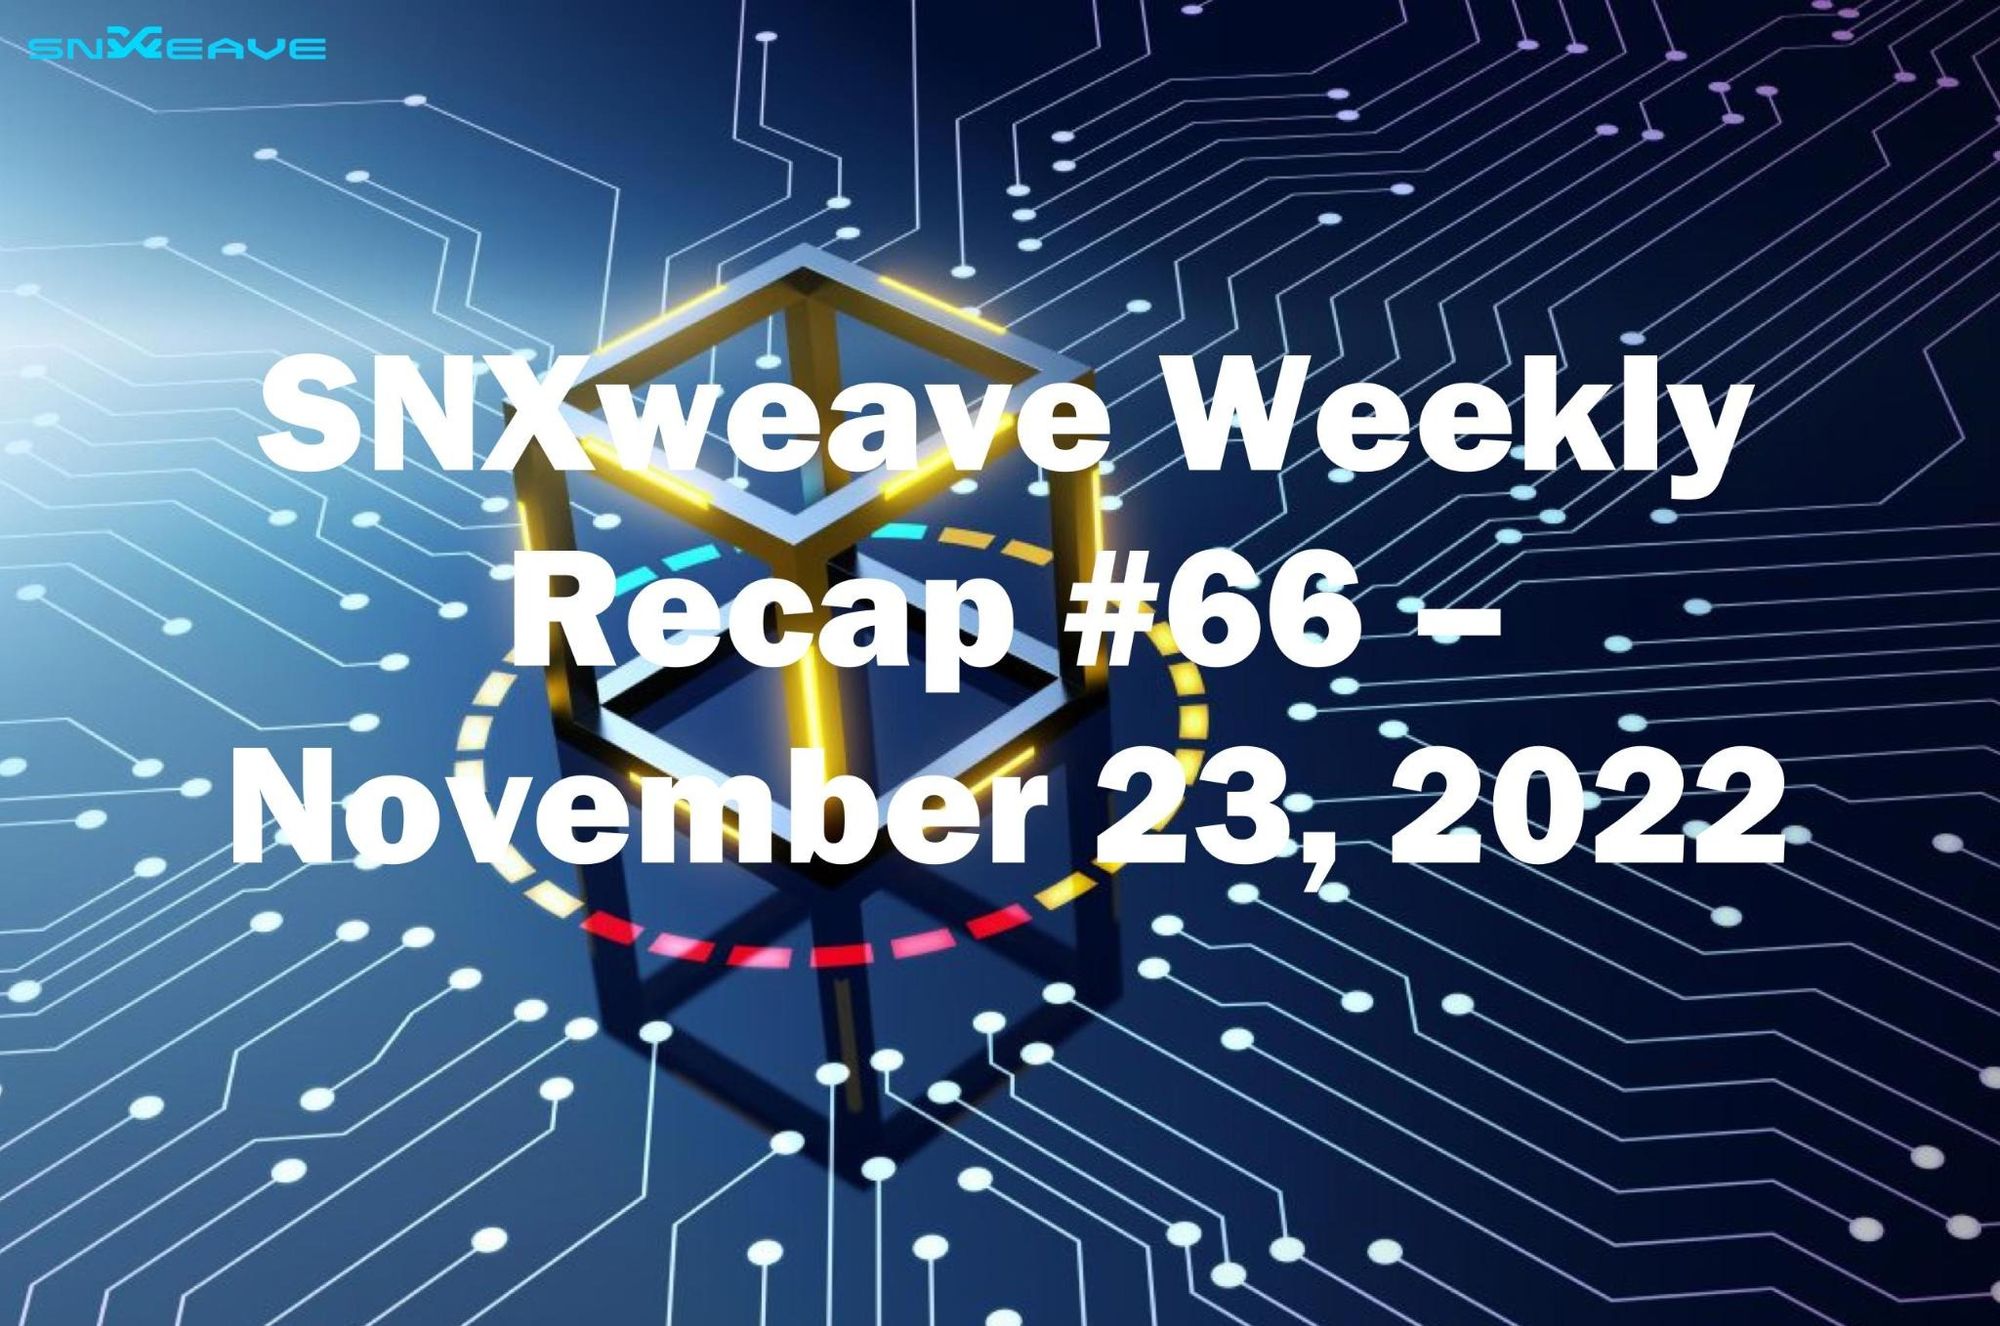 SNXweave Weekly Recap